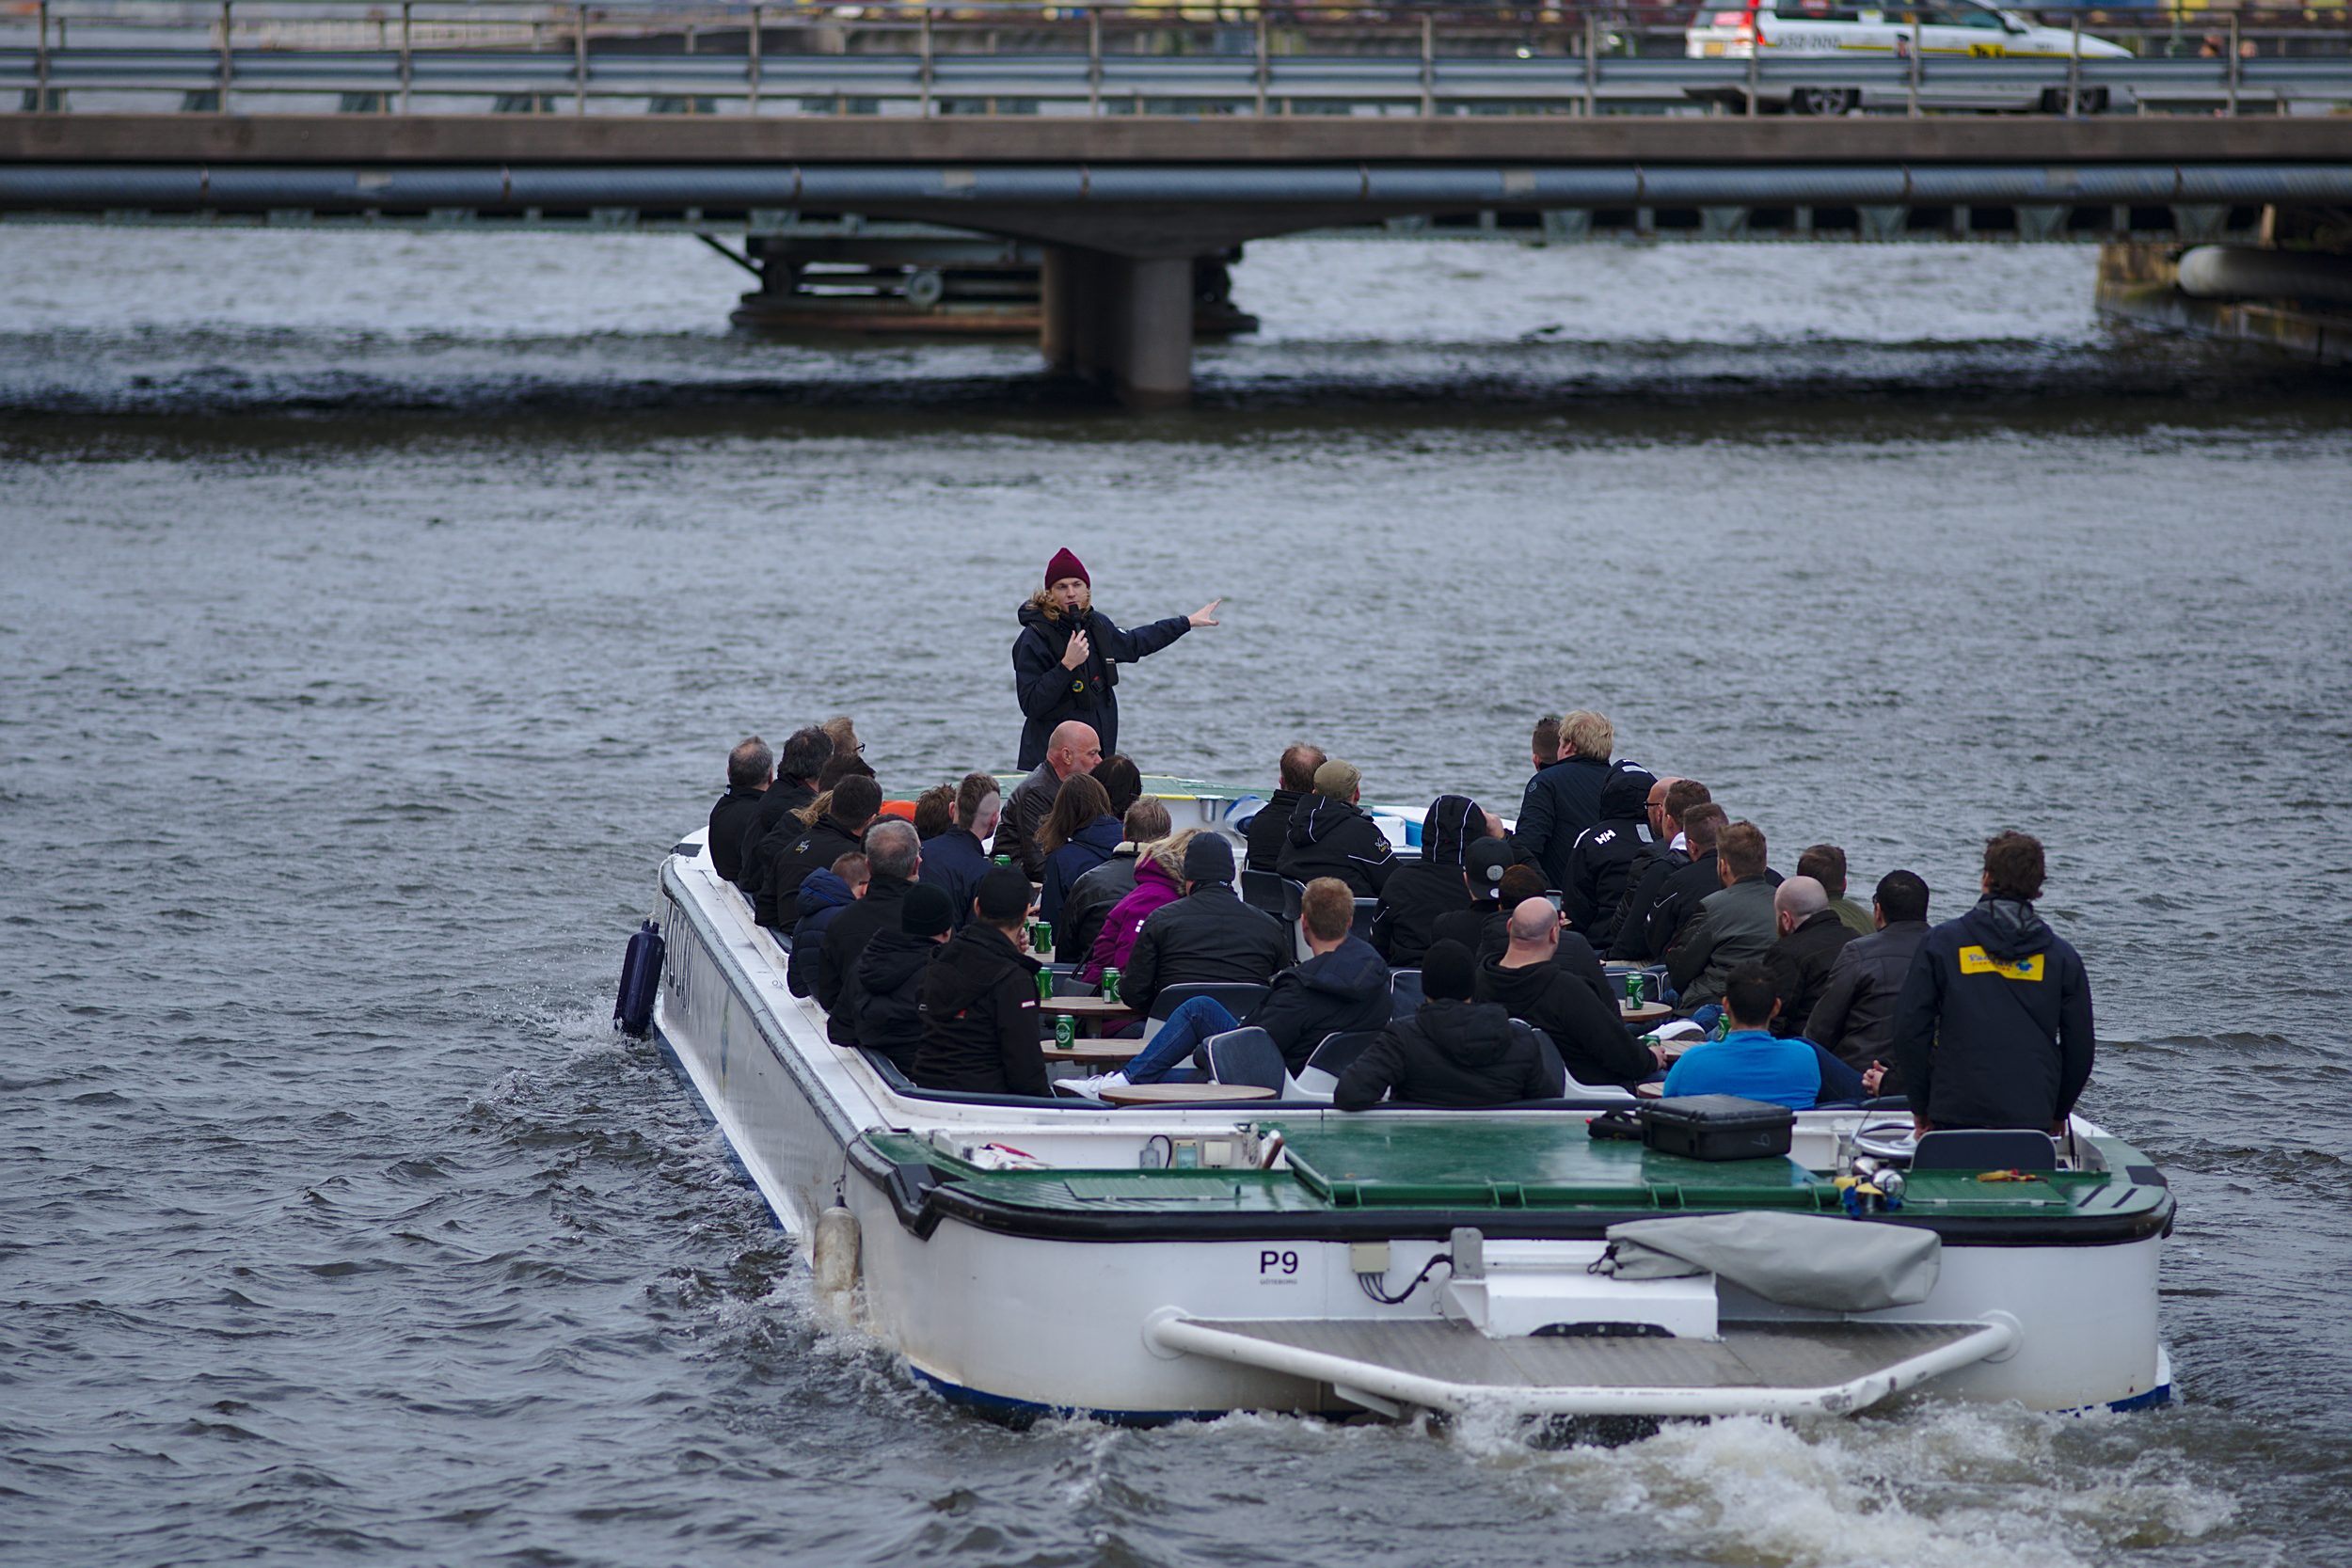 People on the Paddan boat